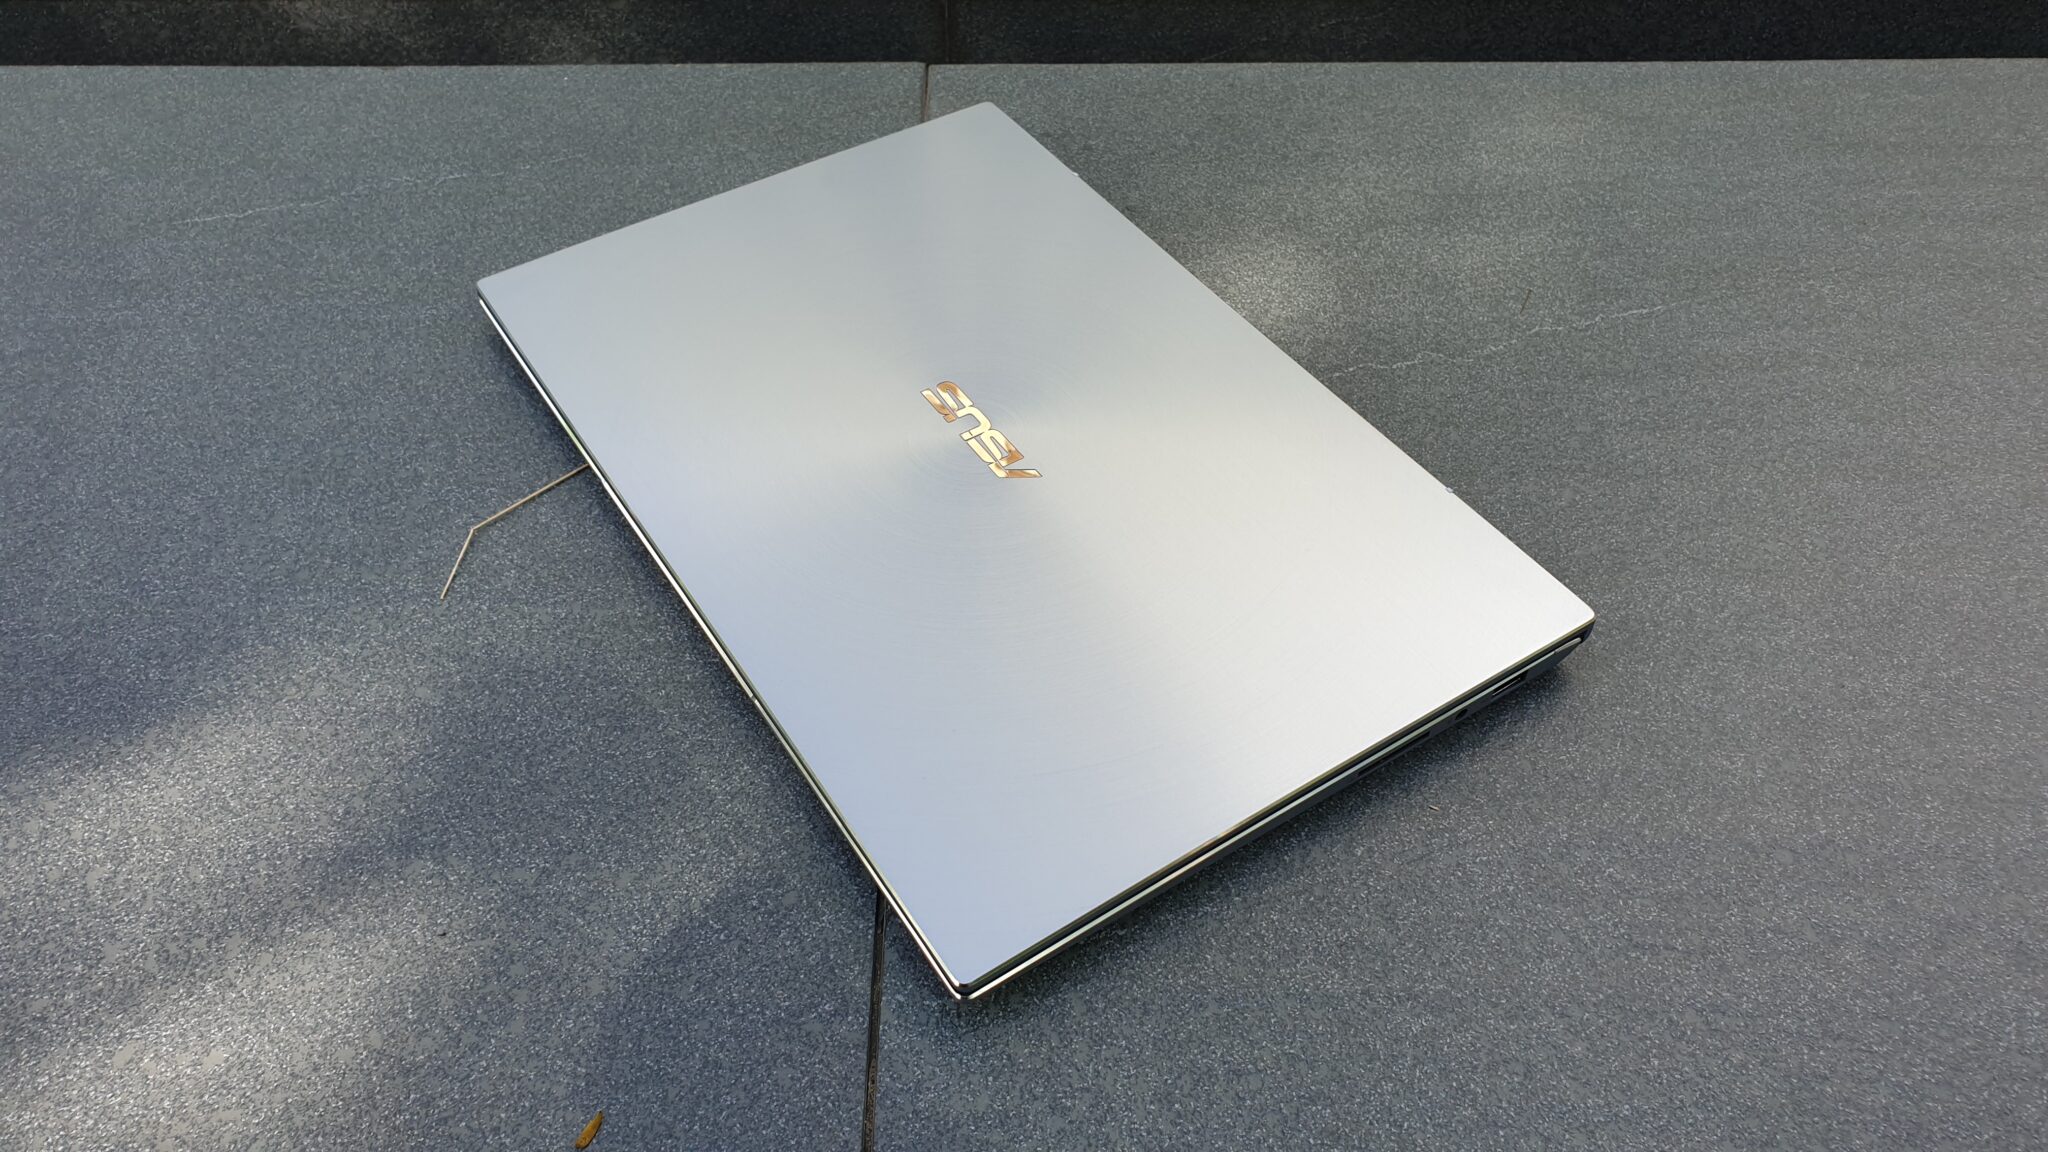 Asus ZenBook 14 UM431 angled